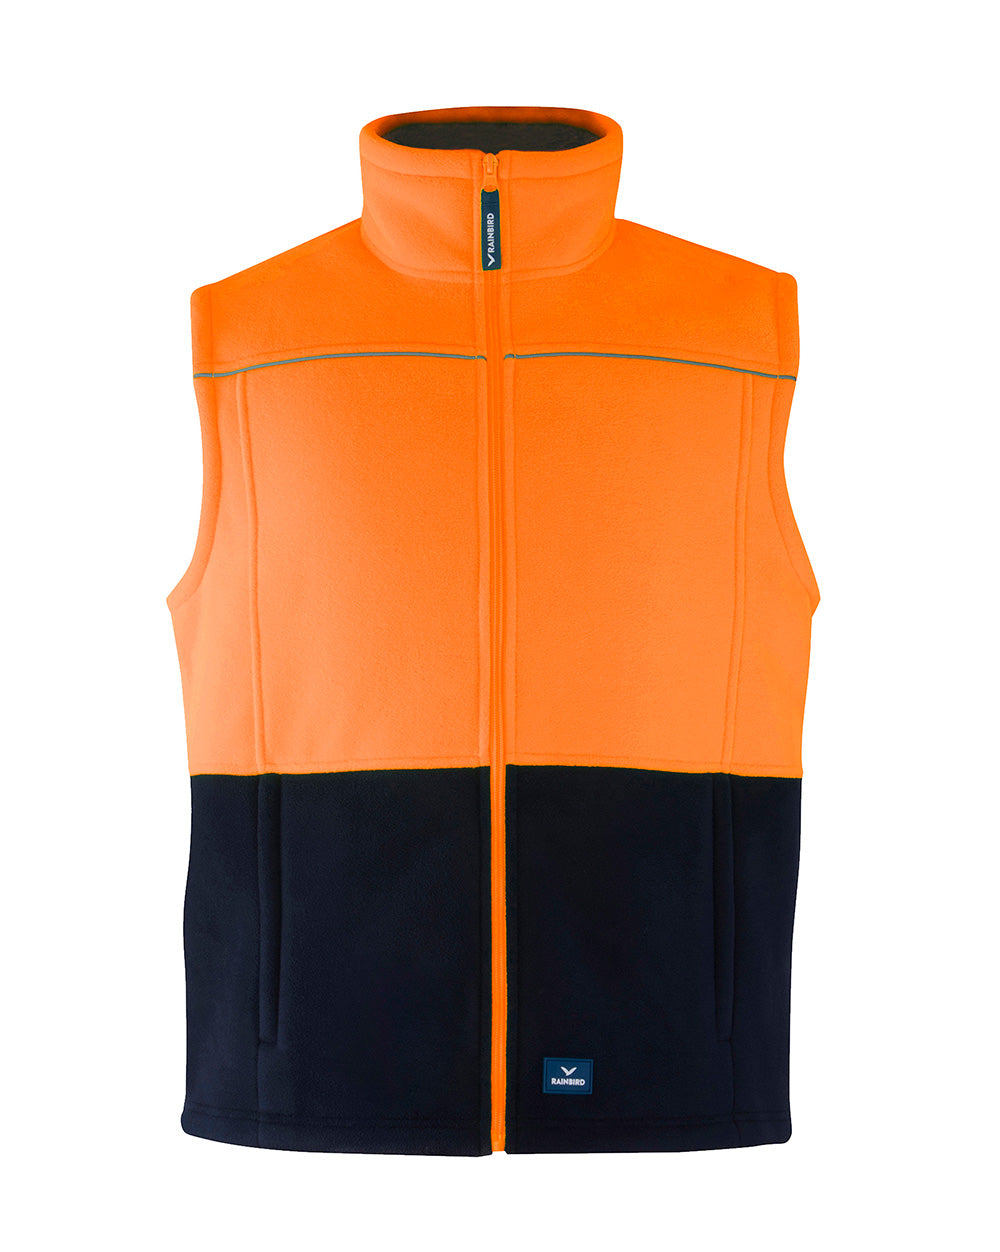 Maguire Vest in Fluoro Orange & Navy